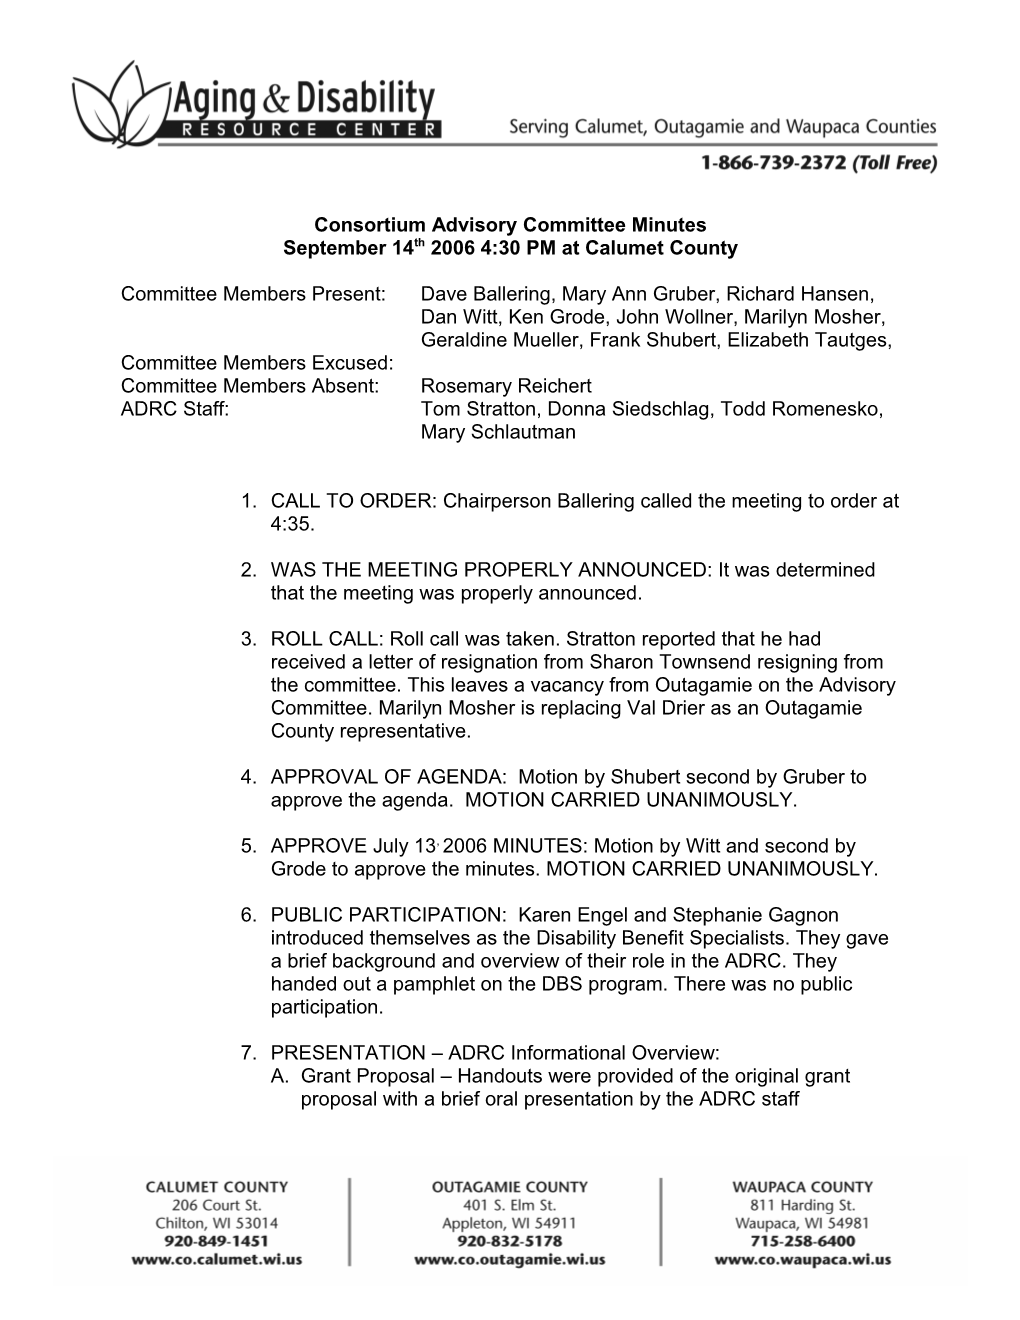 Consortium Advisory Committee Minutes